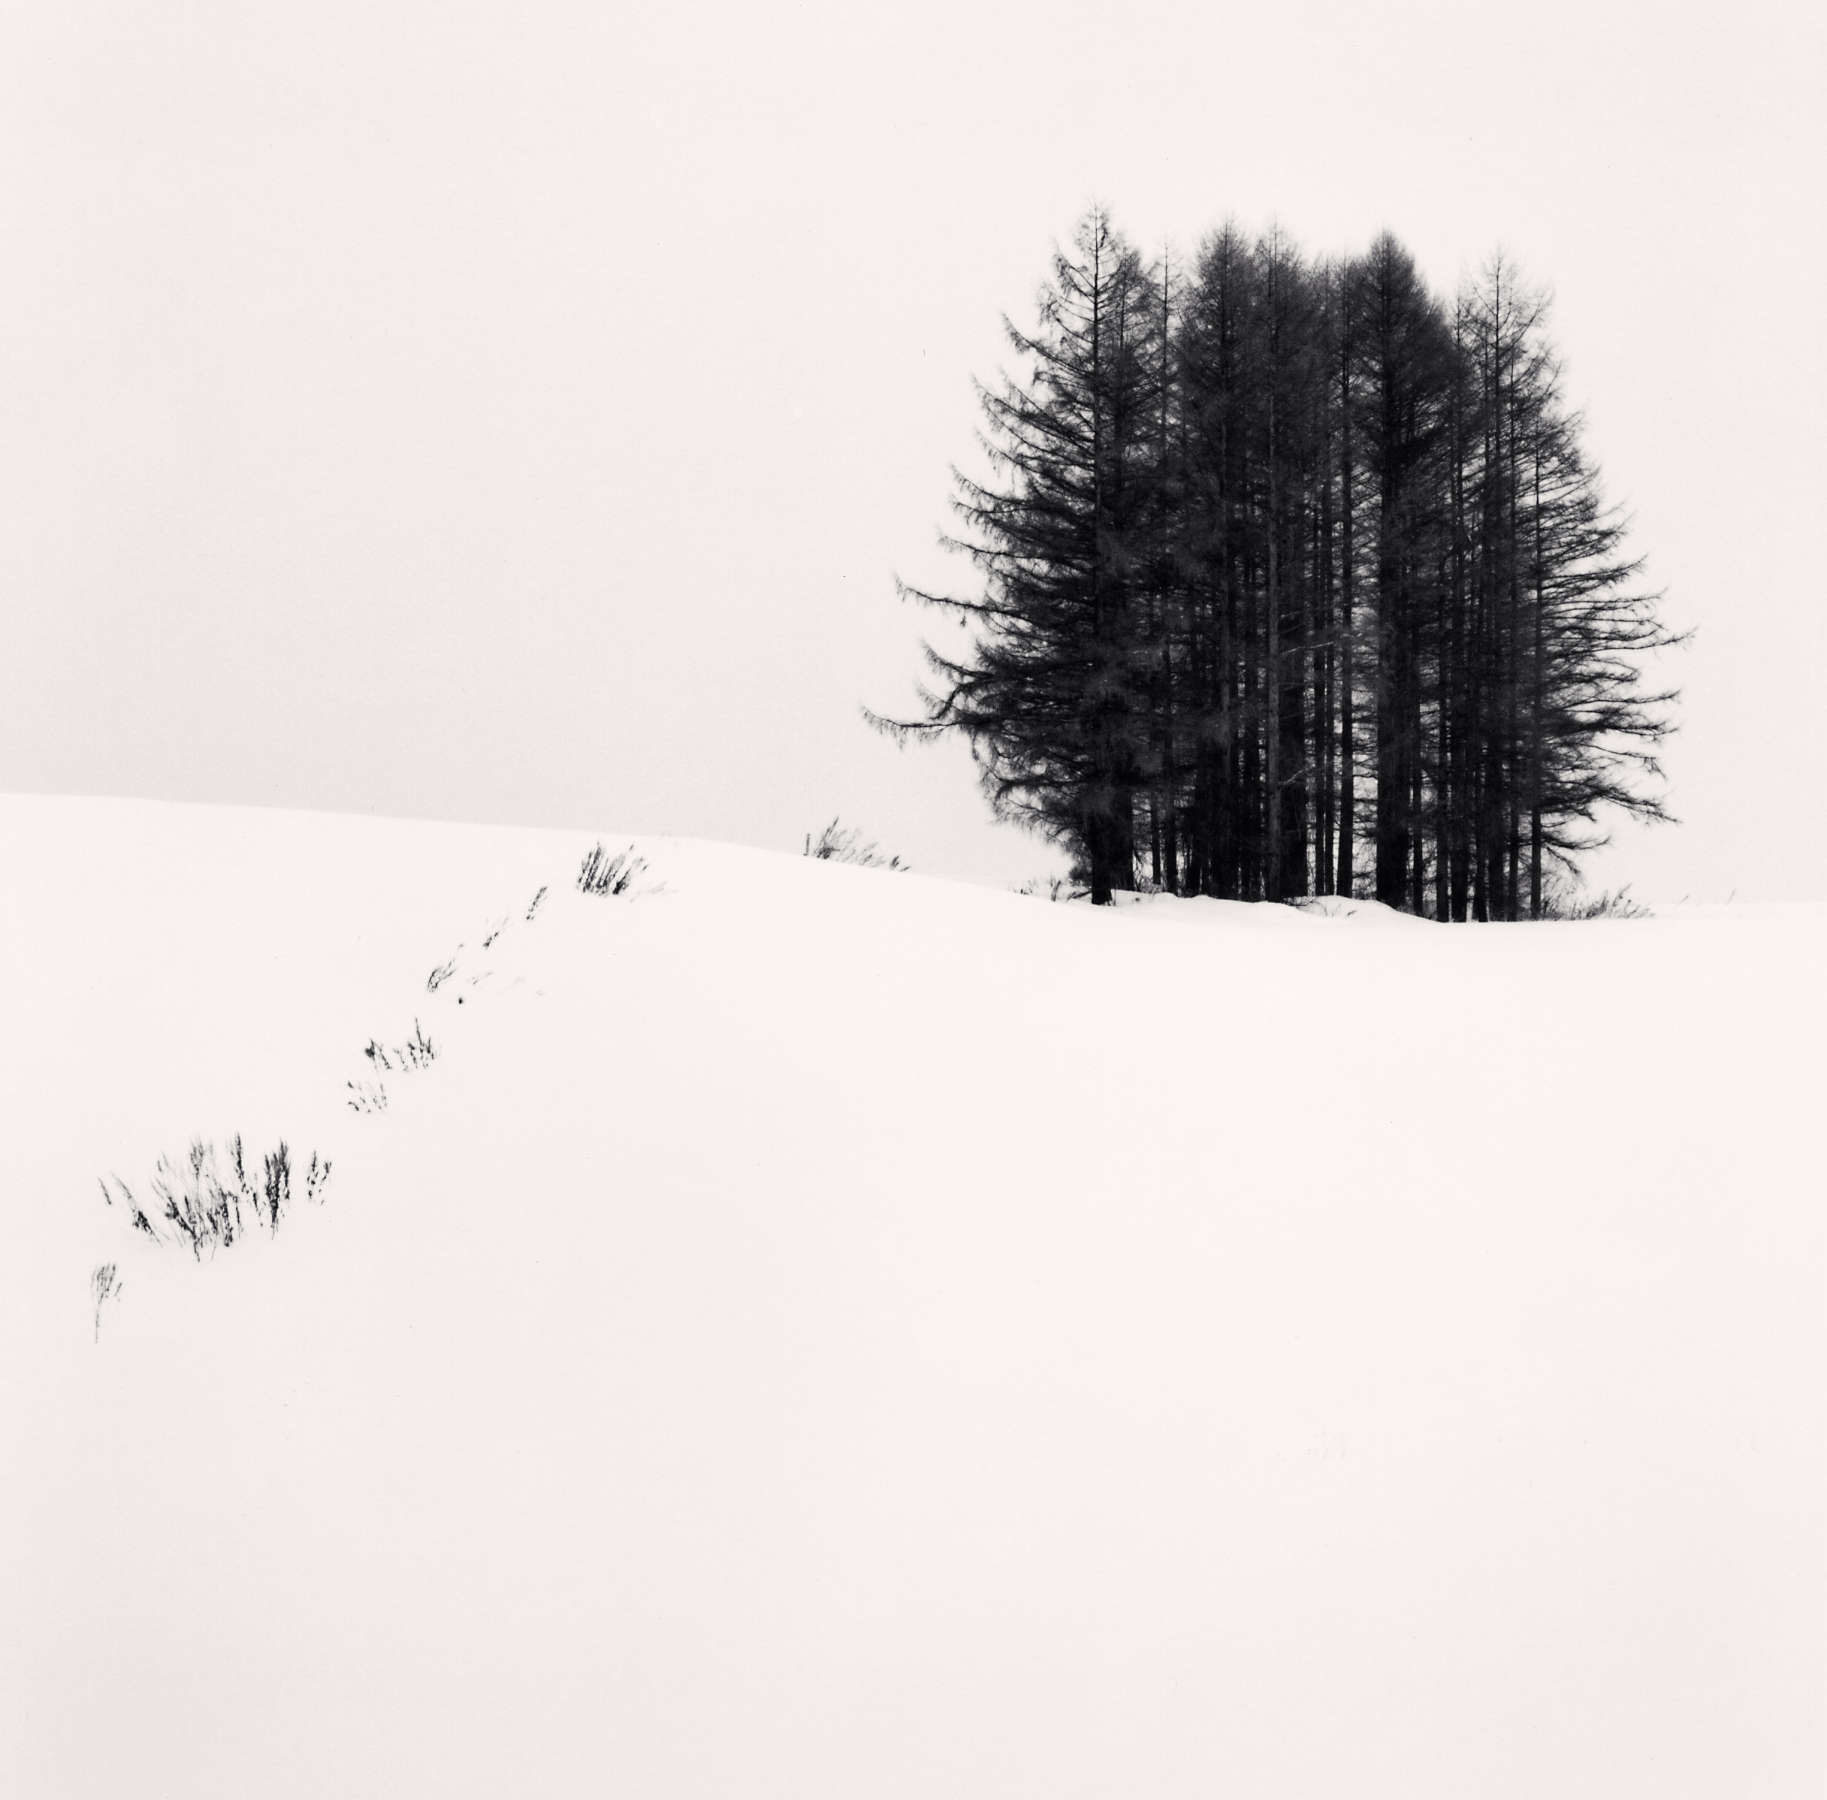 Michael Kenna, Cold Landscape, Sanai, Hokkaido, Japan, 2004